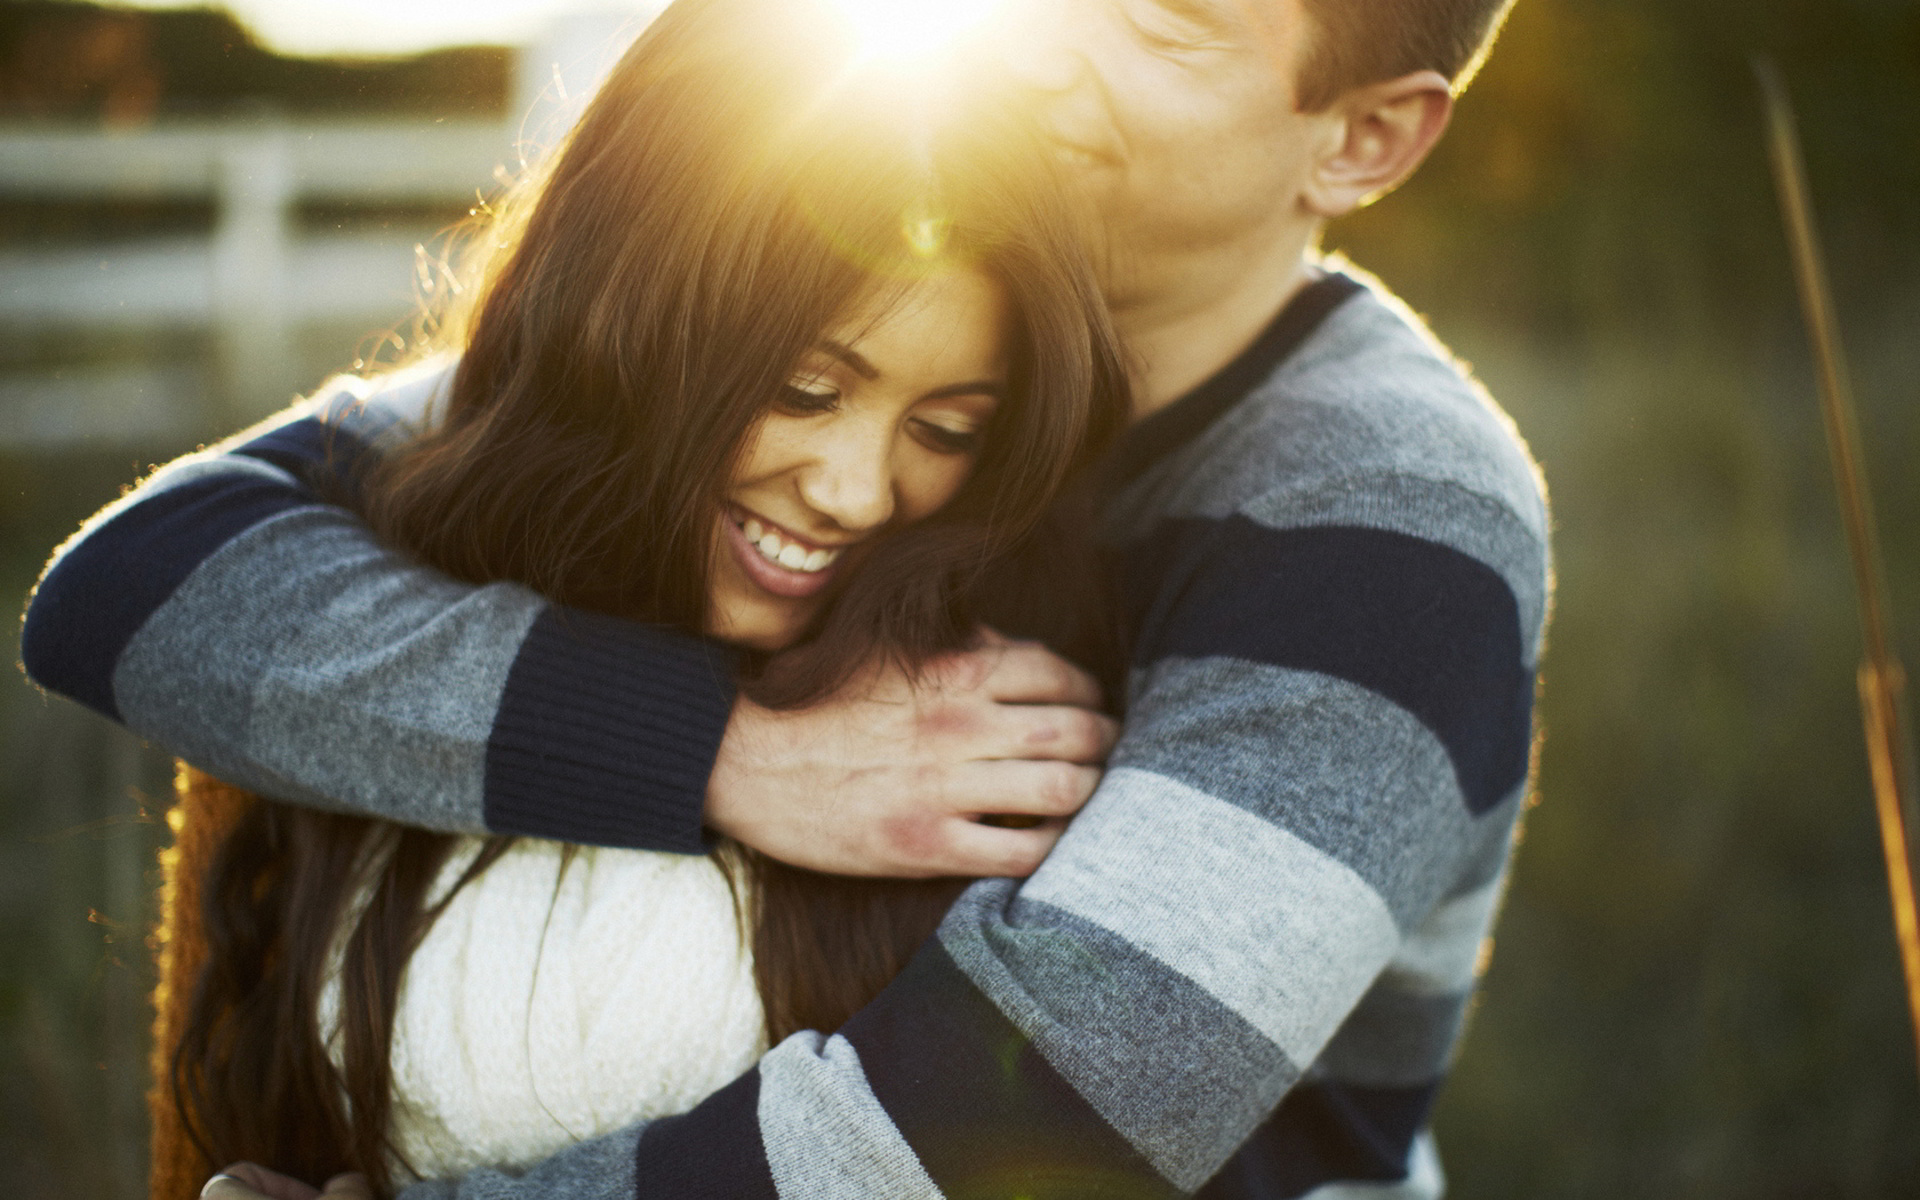 Hug More To Get Happier And Healthier Butterbin